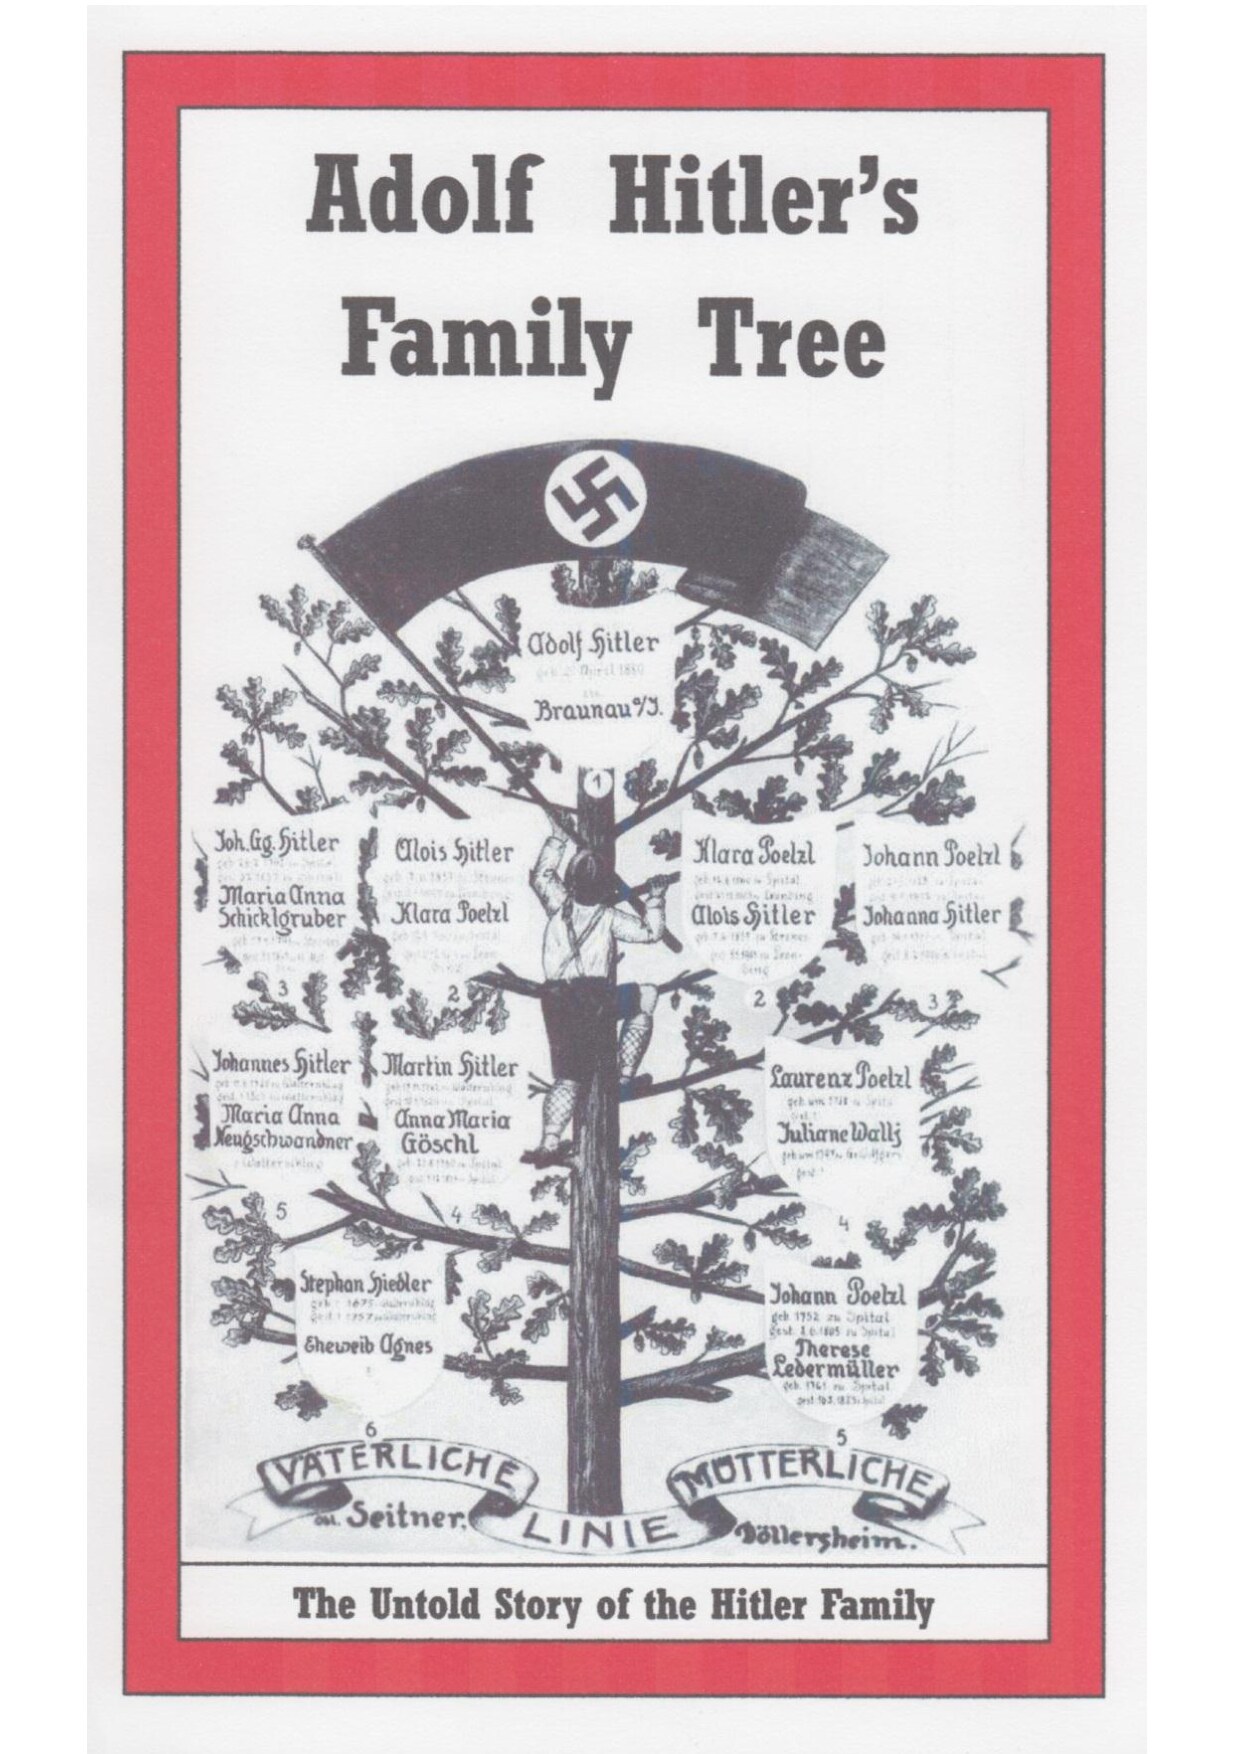 Konder, Alfred; Adolf Hitler's Family Tree - The Untold Story of the Hitler Family